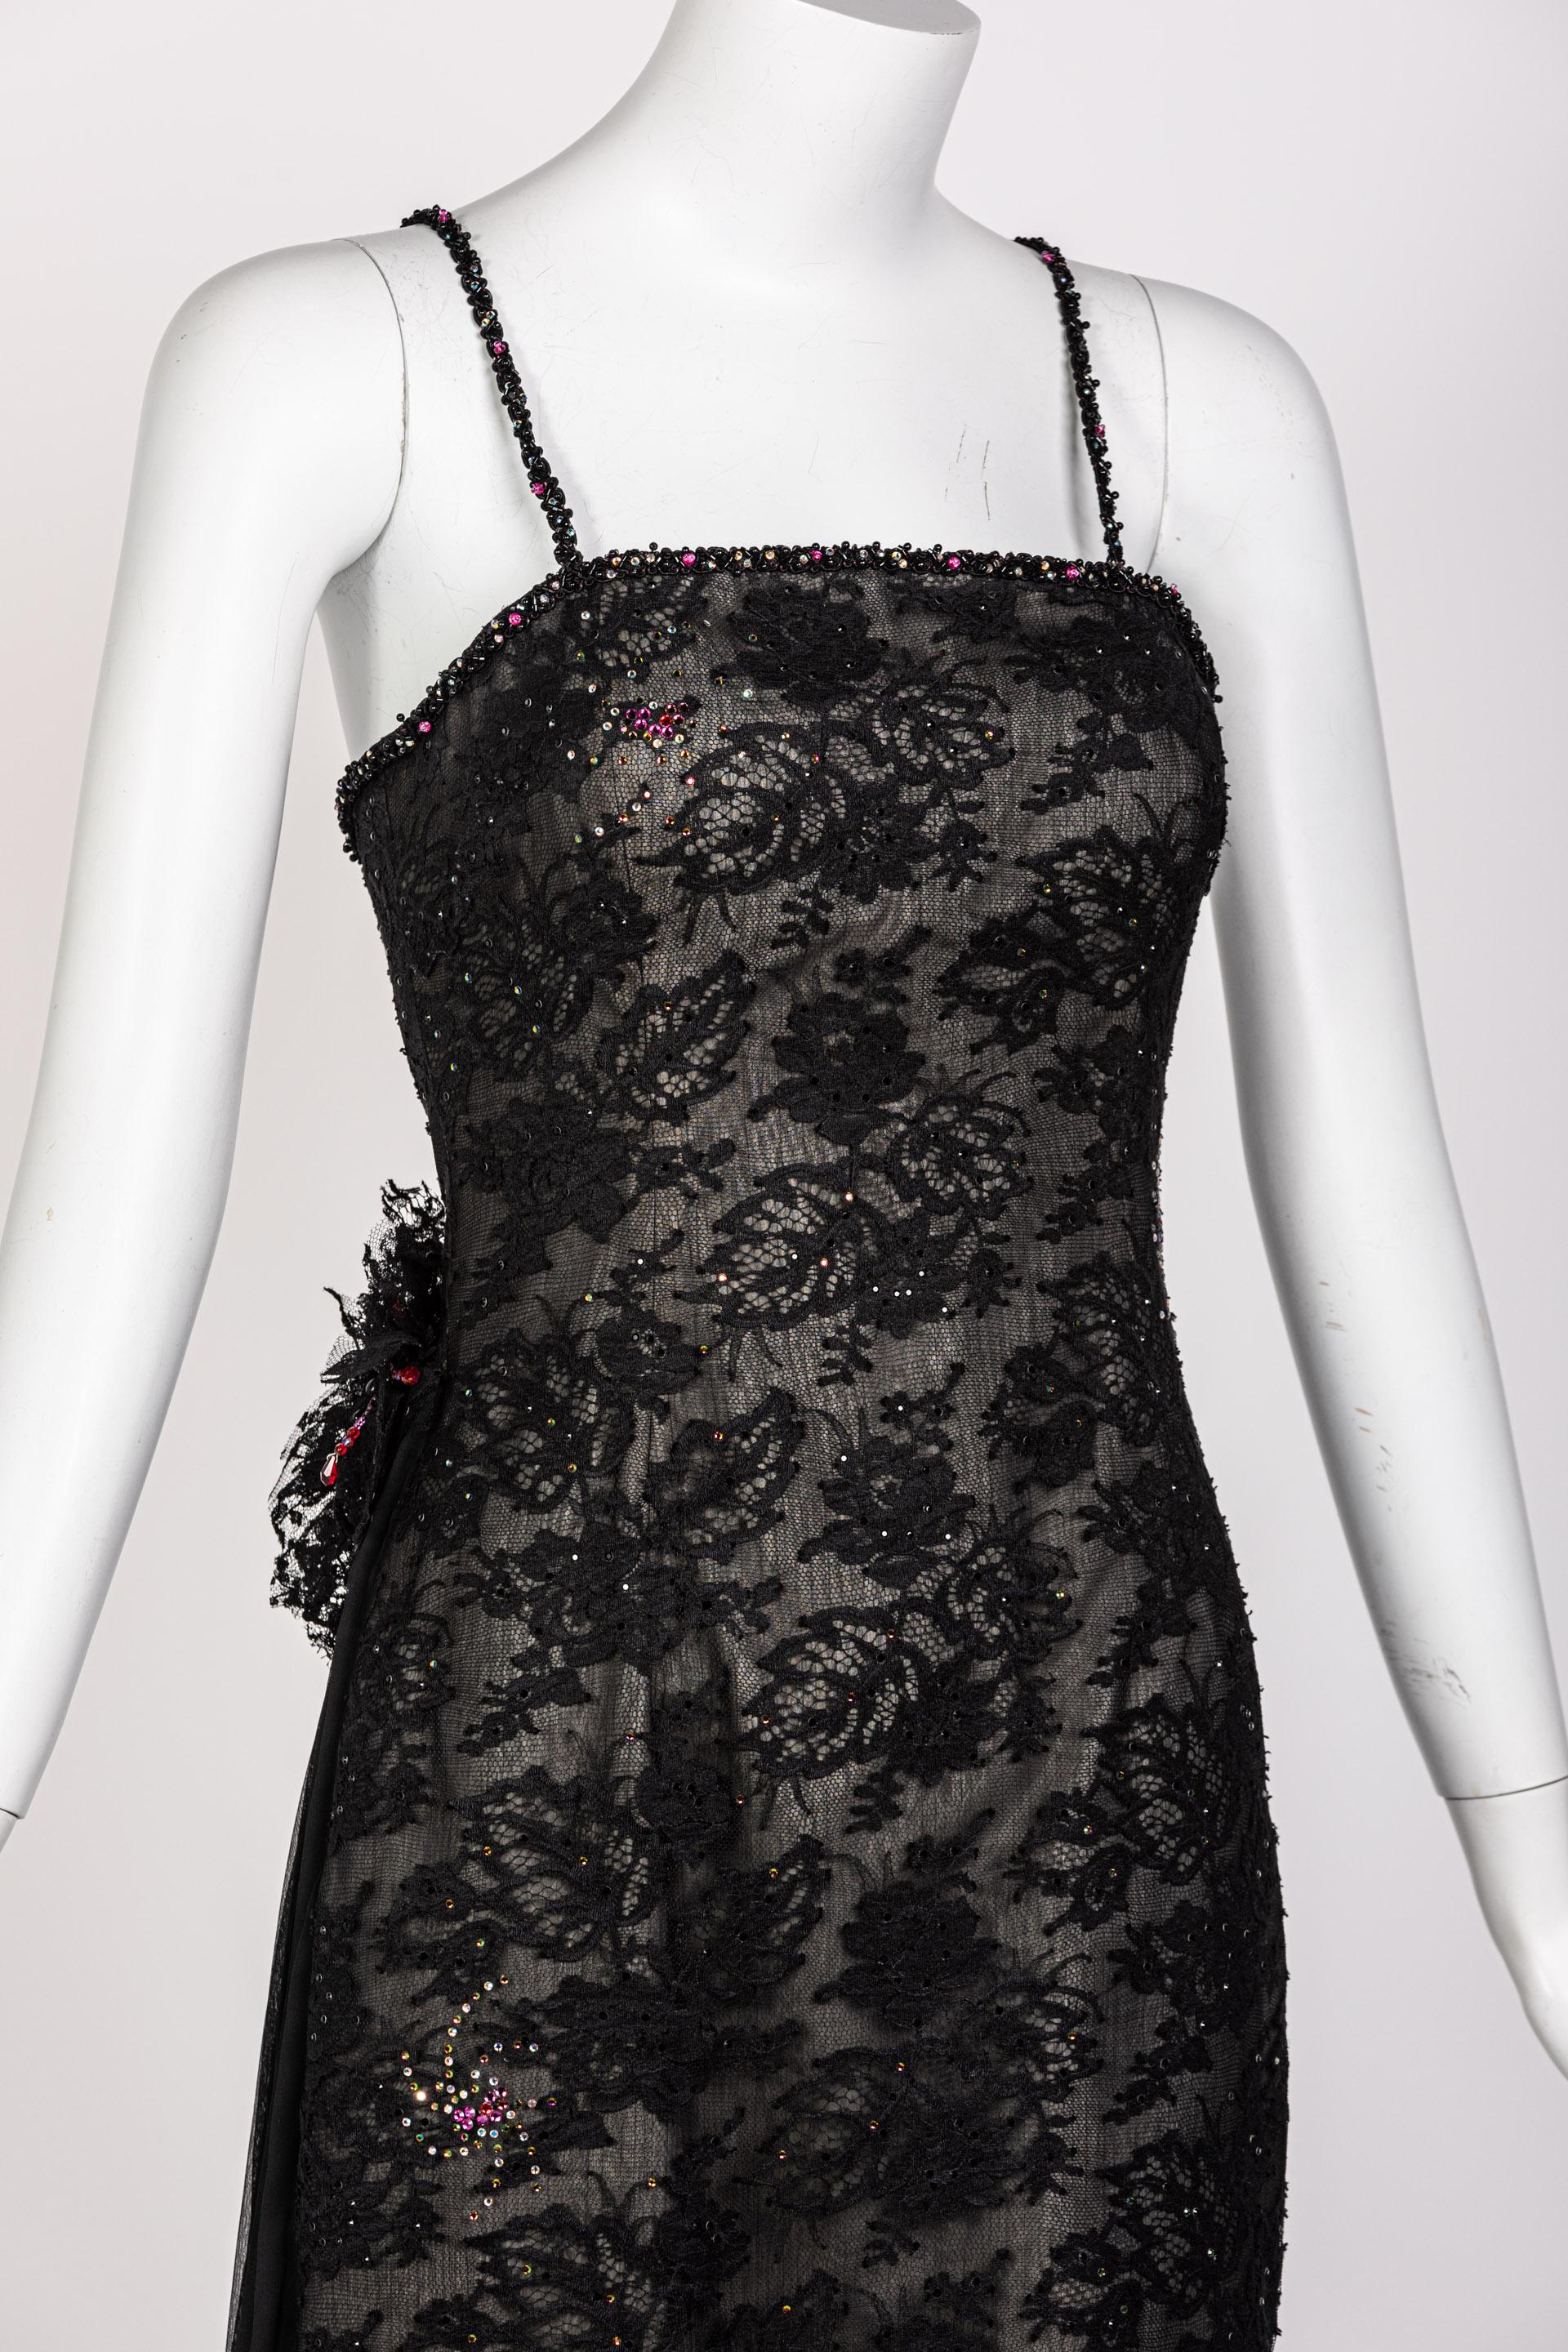 Vintage Sam Carlin Saks Fifth Avenue Black Lace Gown For Sale 6